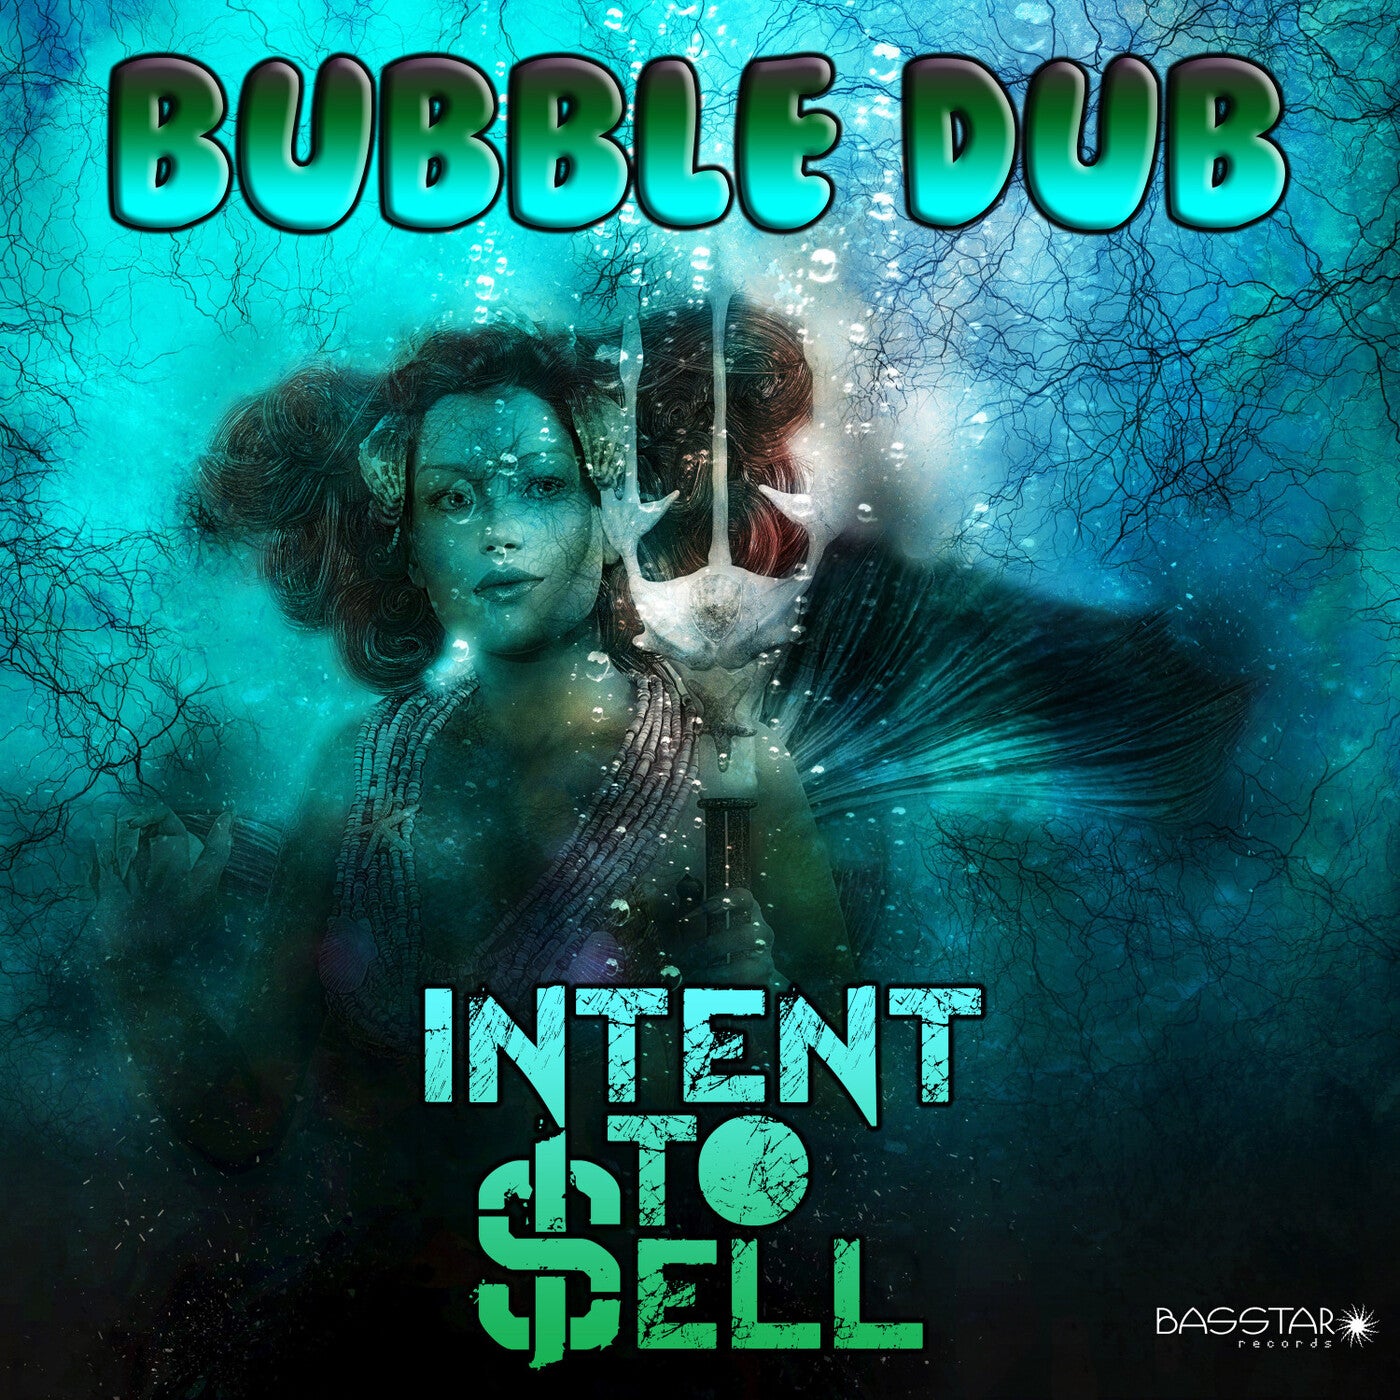 Bubble Dub